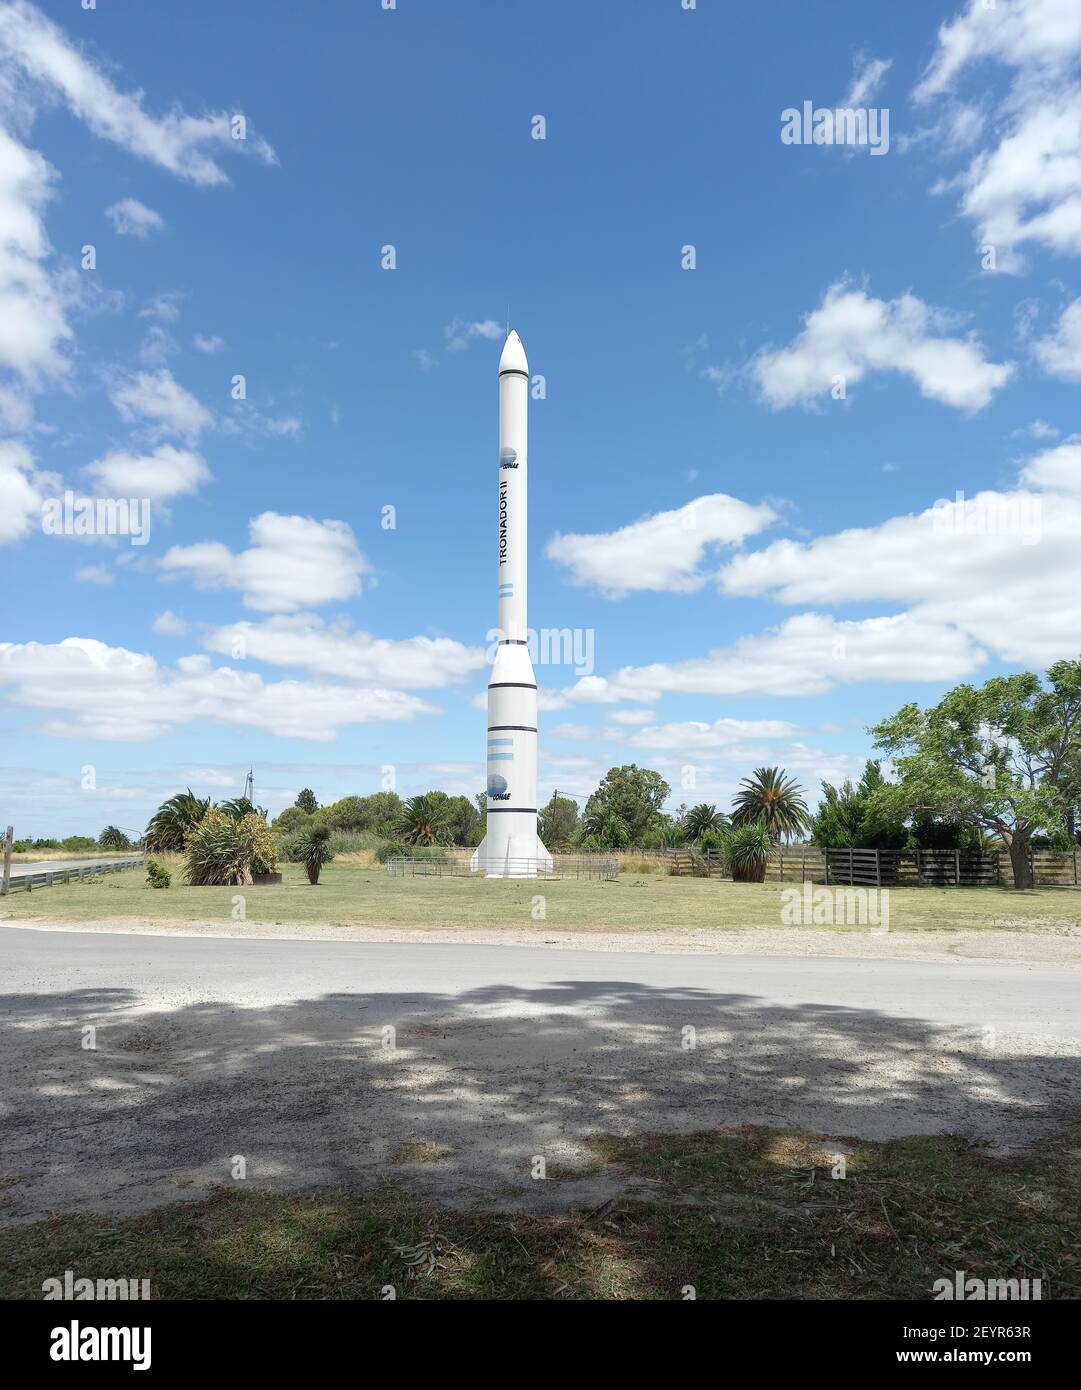 PIPINAS, PUNTA INDIO, BUENOS AIRES, ARGENTINA - Dec 21, 2020: Replica of the Tronador II space launcher designed to place satellites into orbit  for p Stock Photo